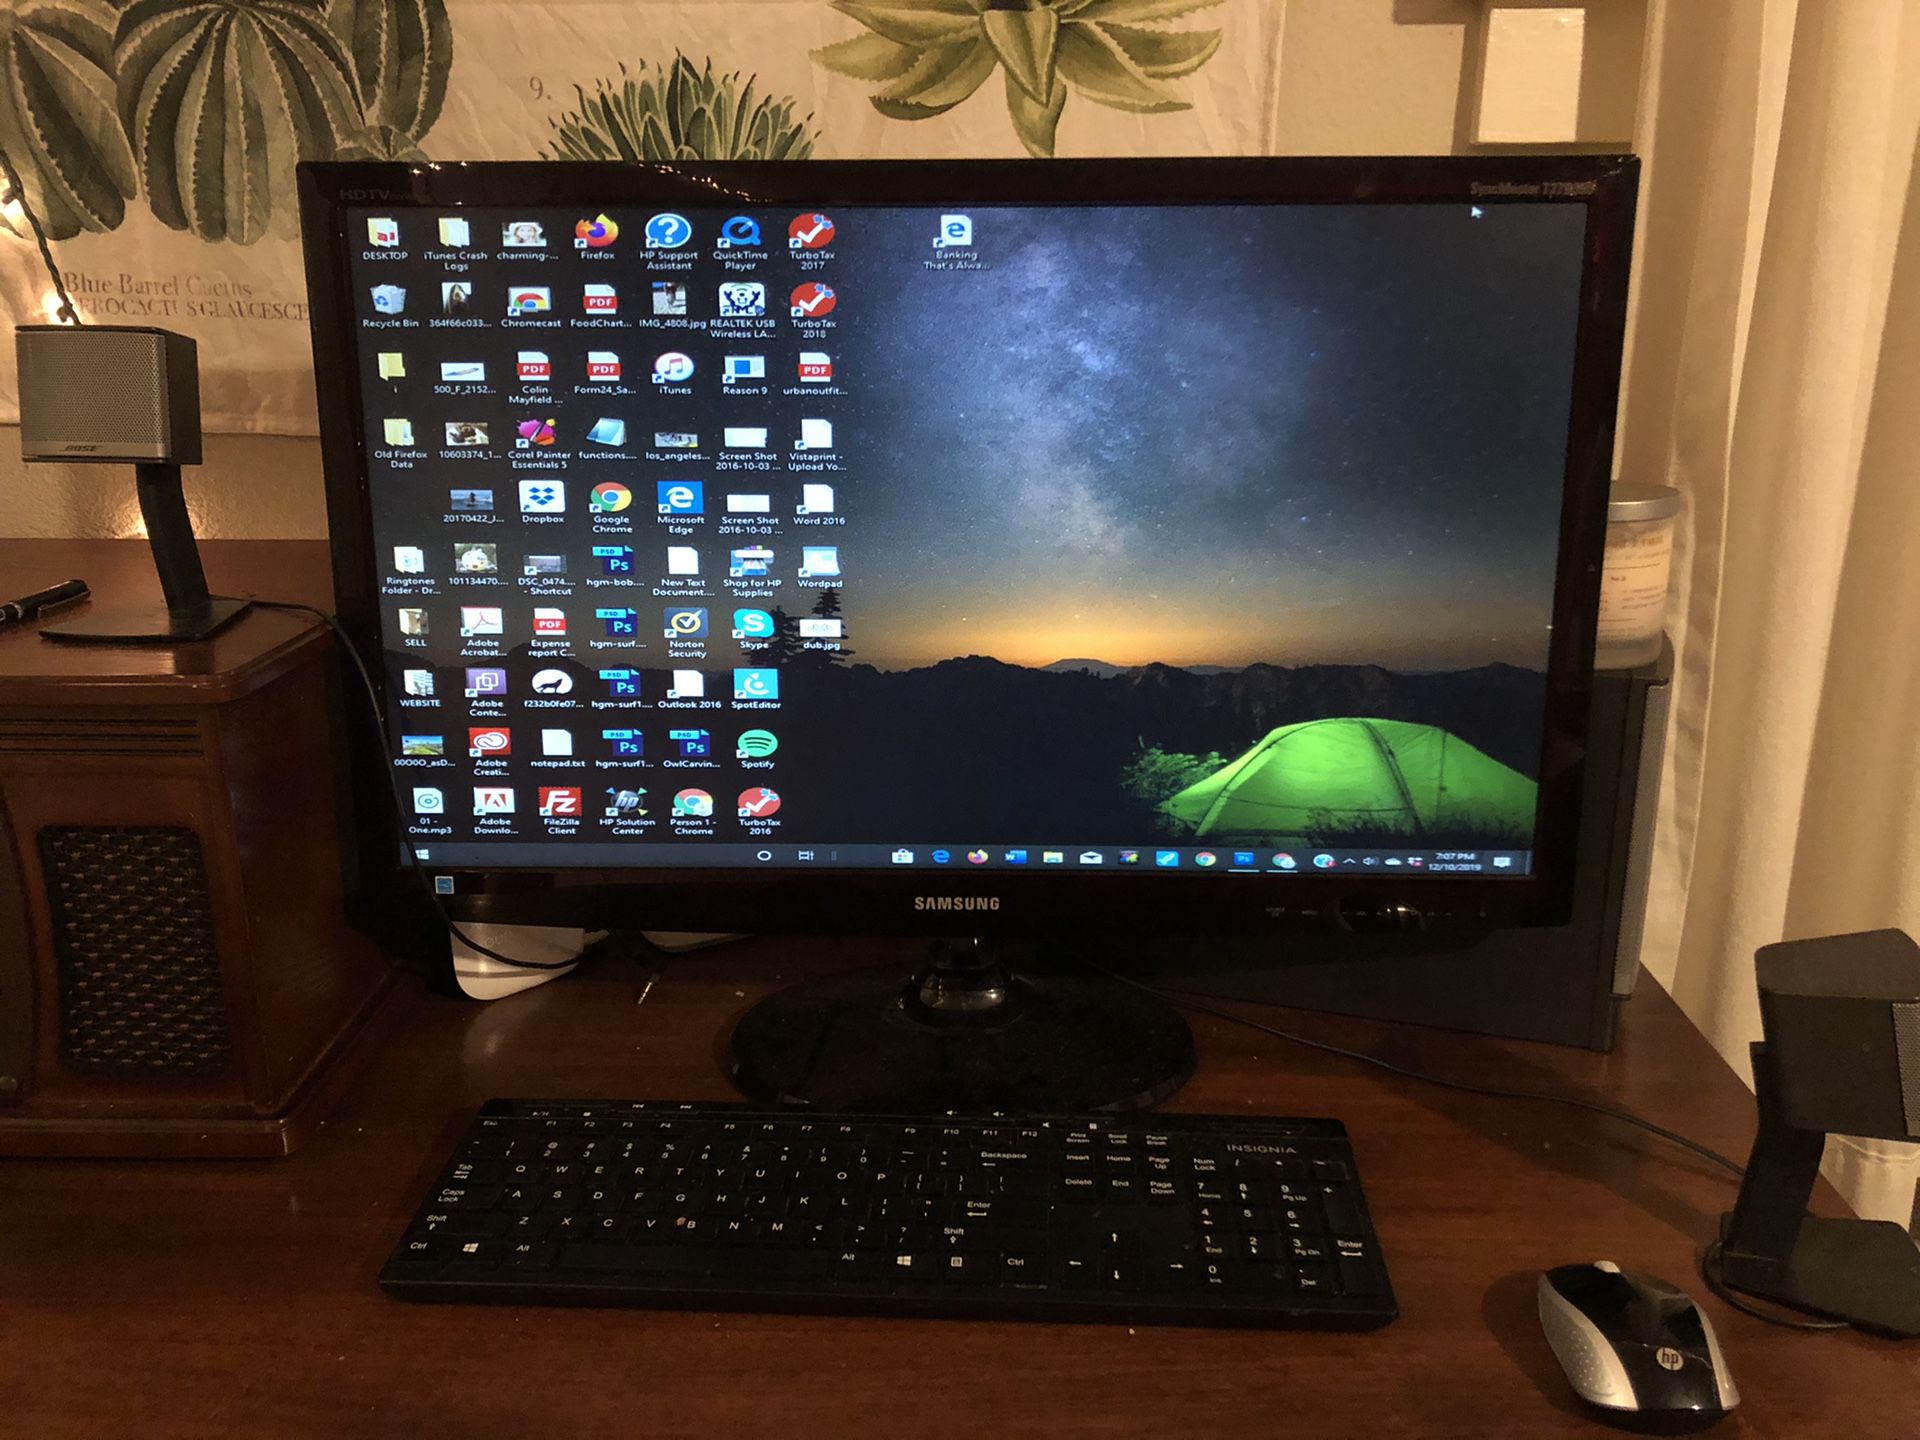 HP Envy computer w/ Samsung monitor/keyboard/mouse